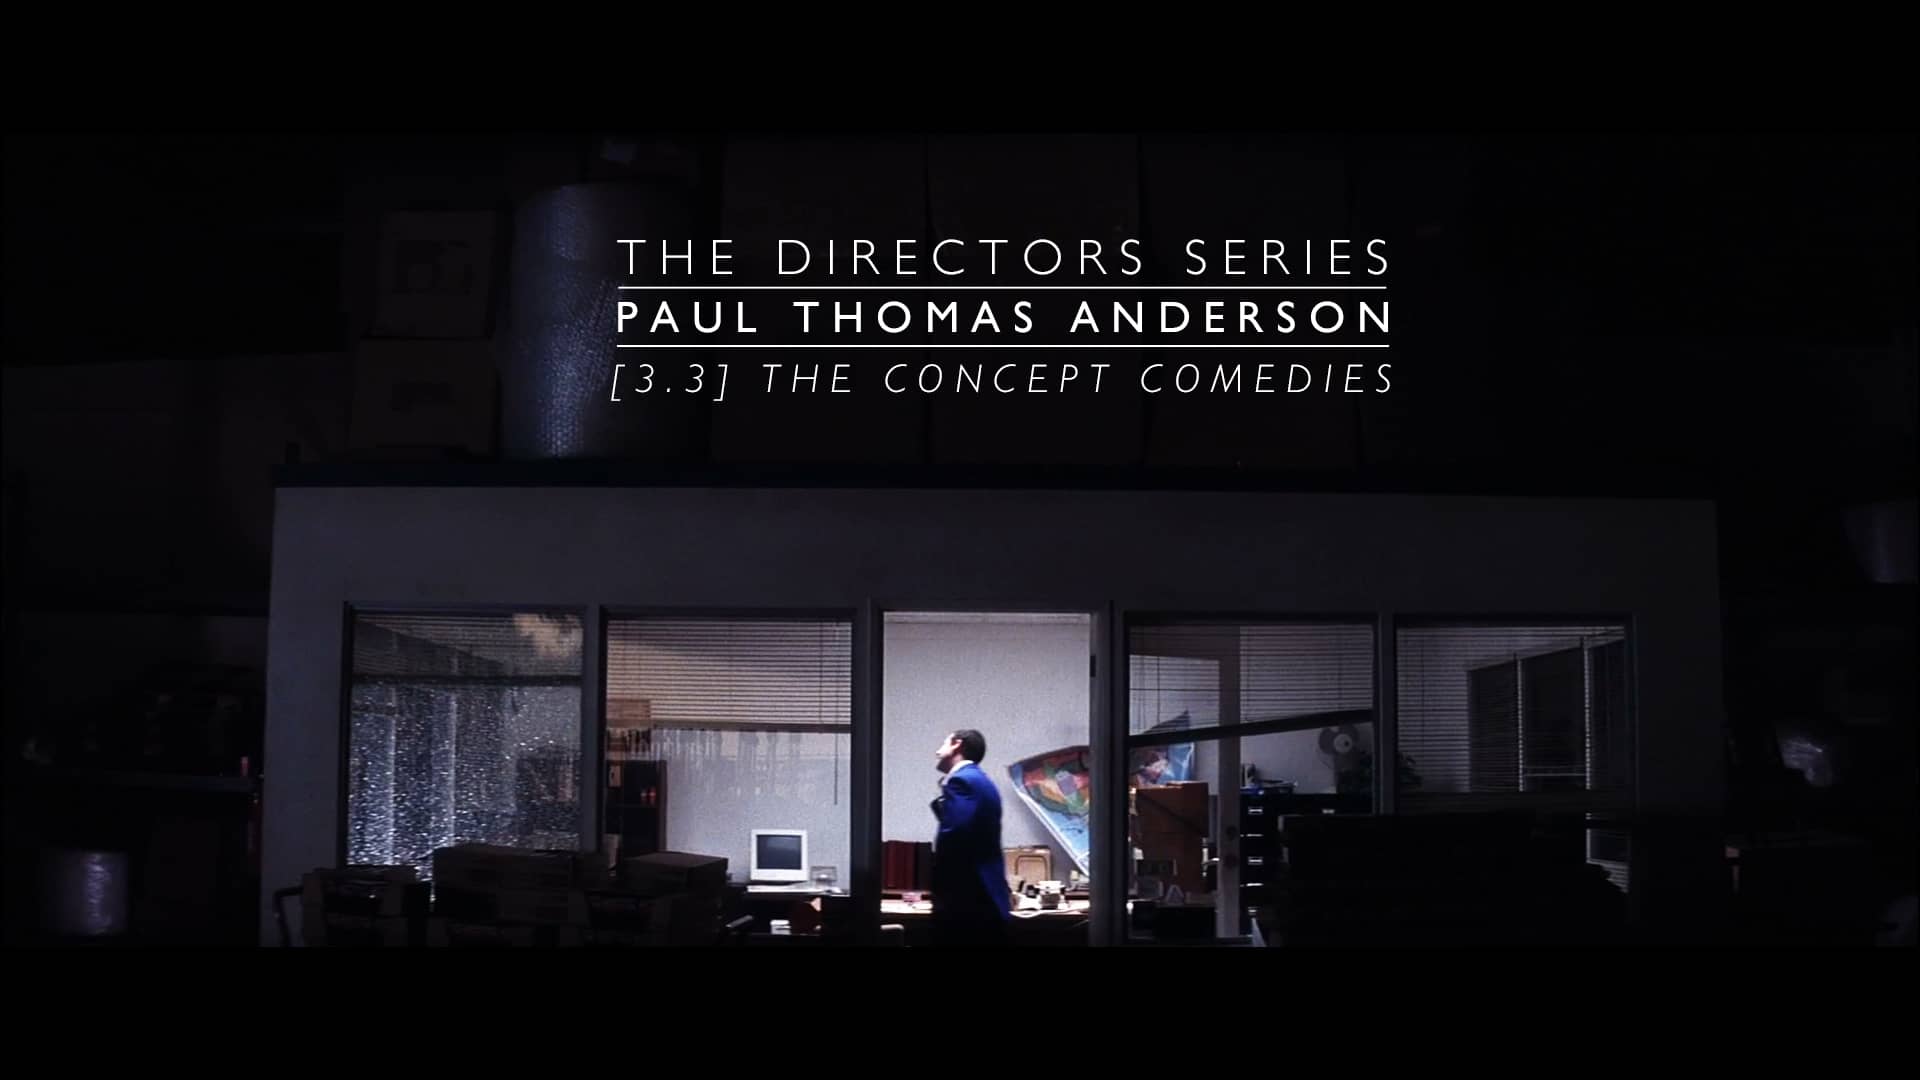 The Directors Series Thomas Anderson [3.3] on Vimeo